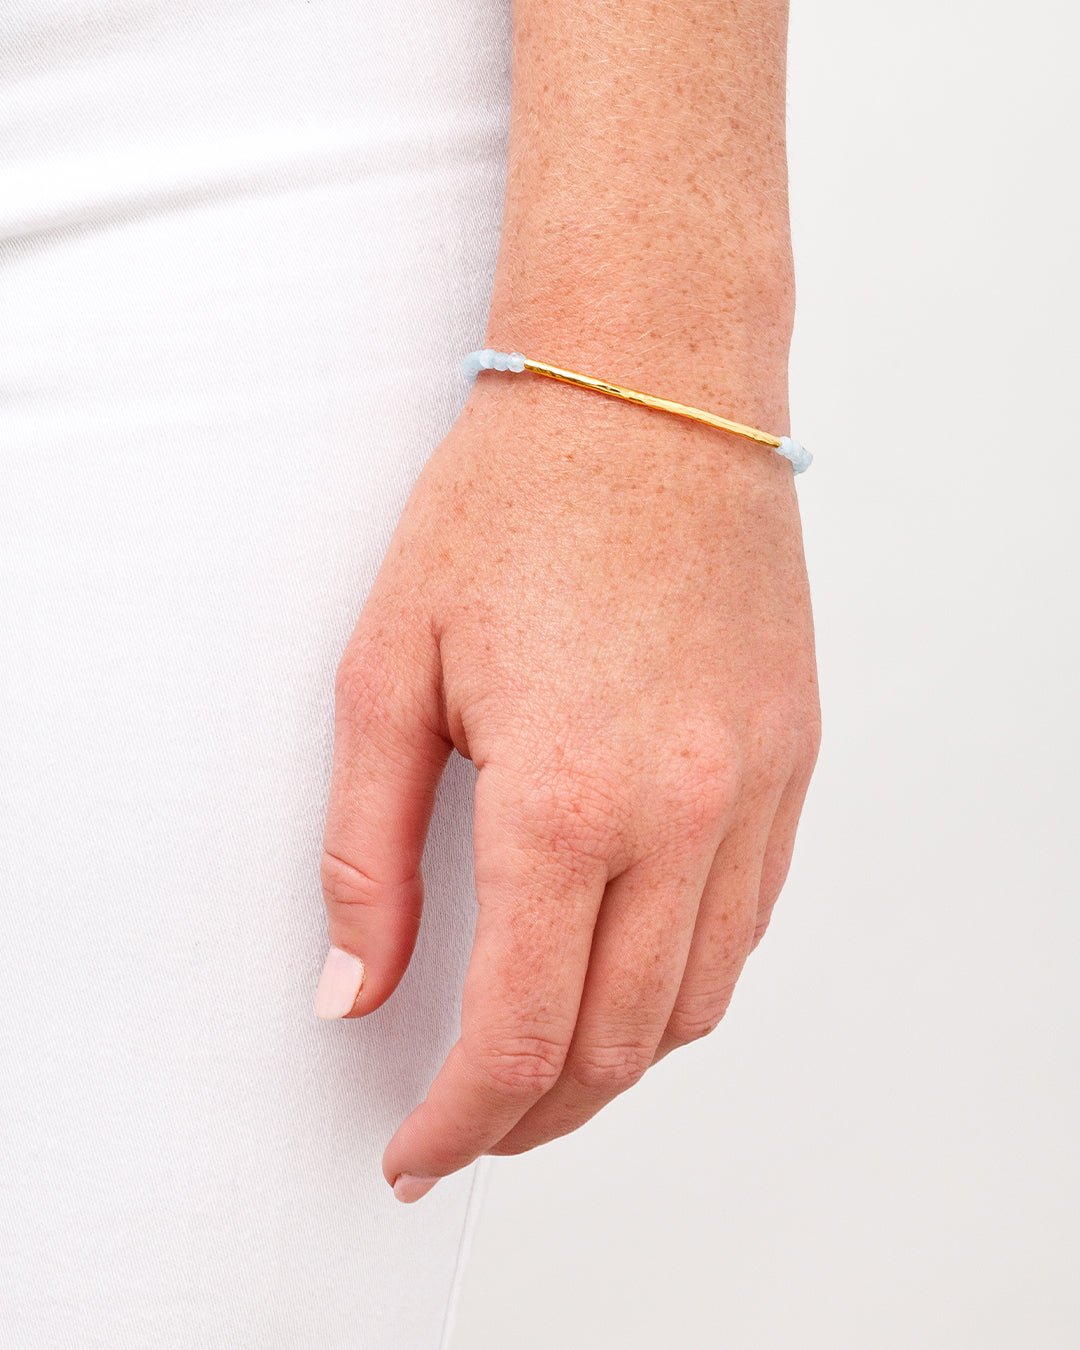 Power Gemstone Bracelet for Truth || option::Gold Plated, Aquamarine